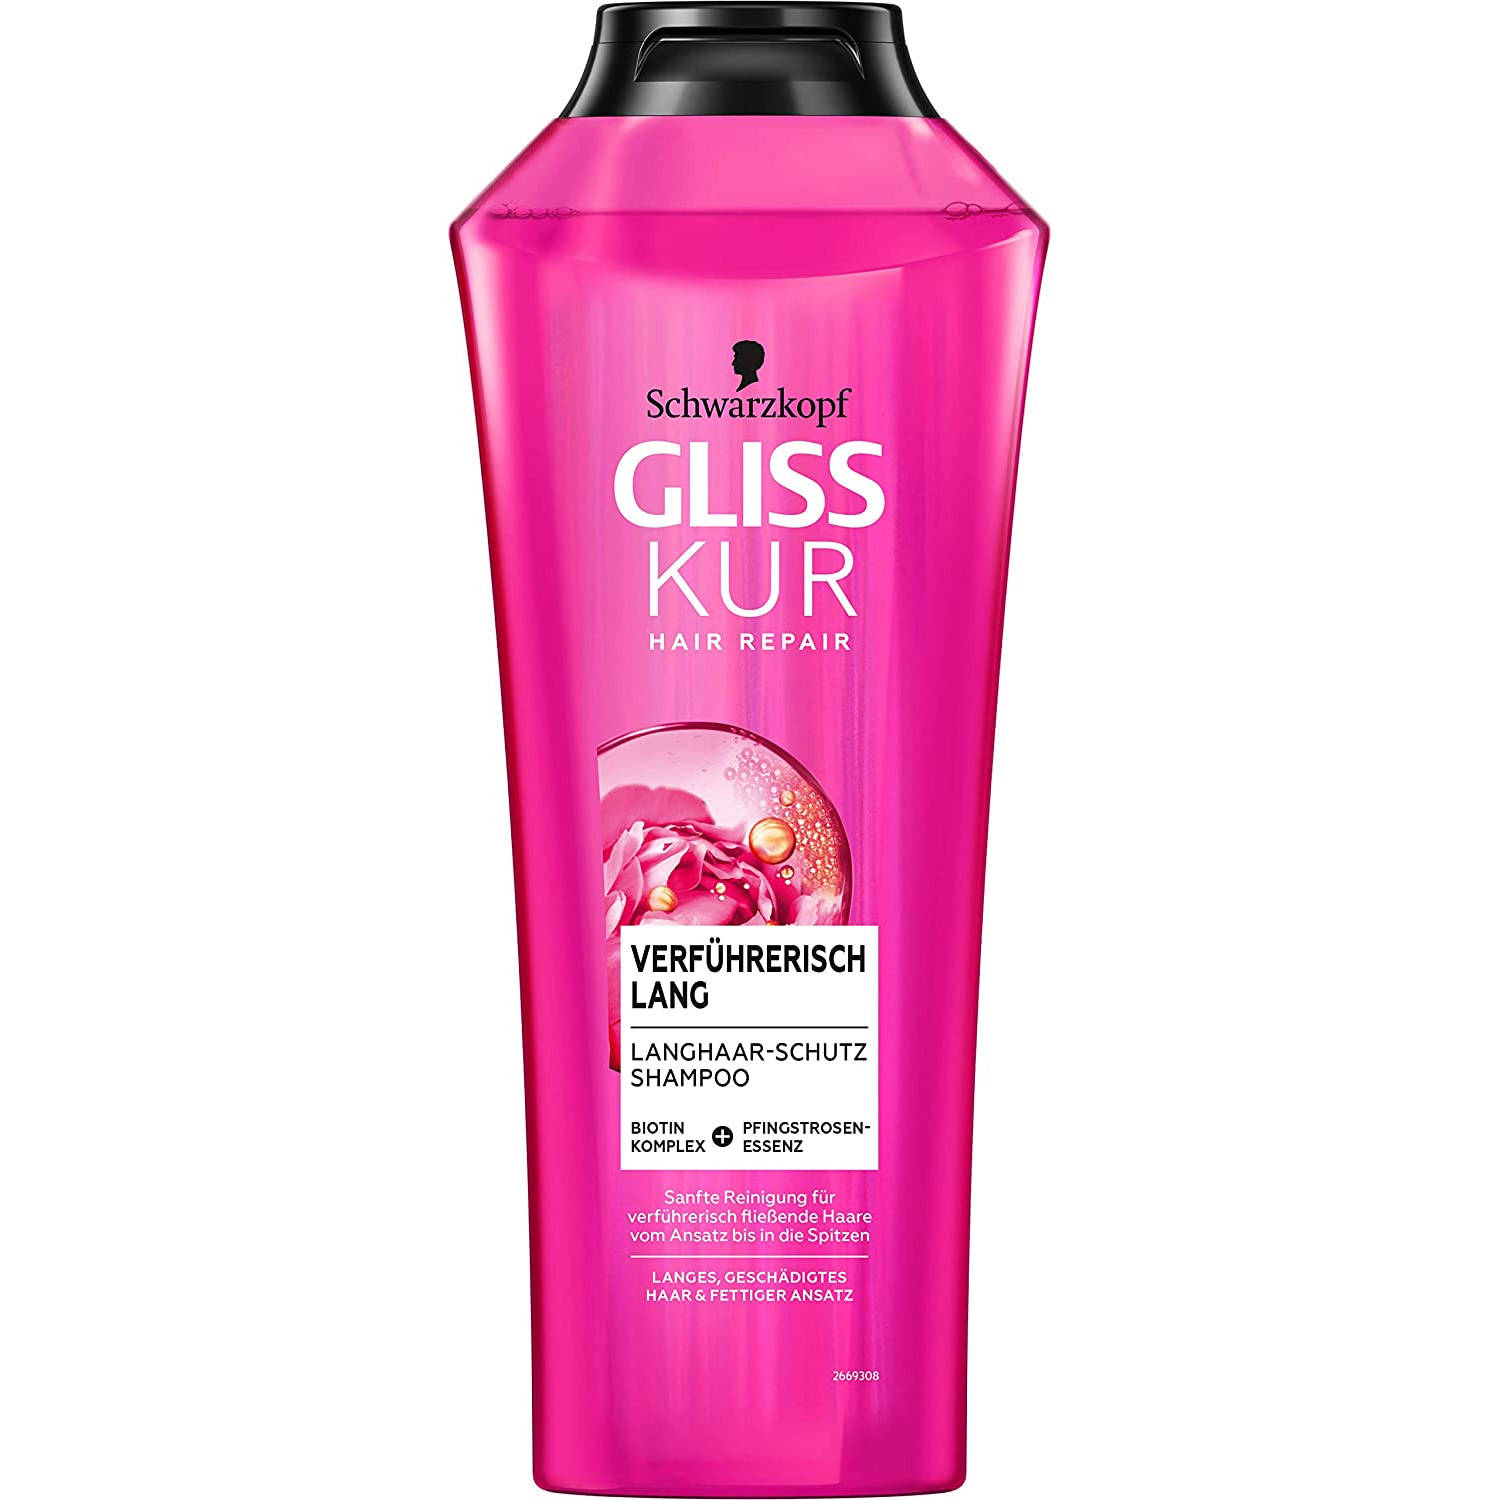 gliss kur szampon 400 ml